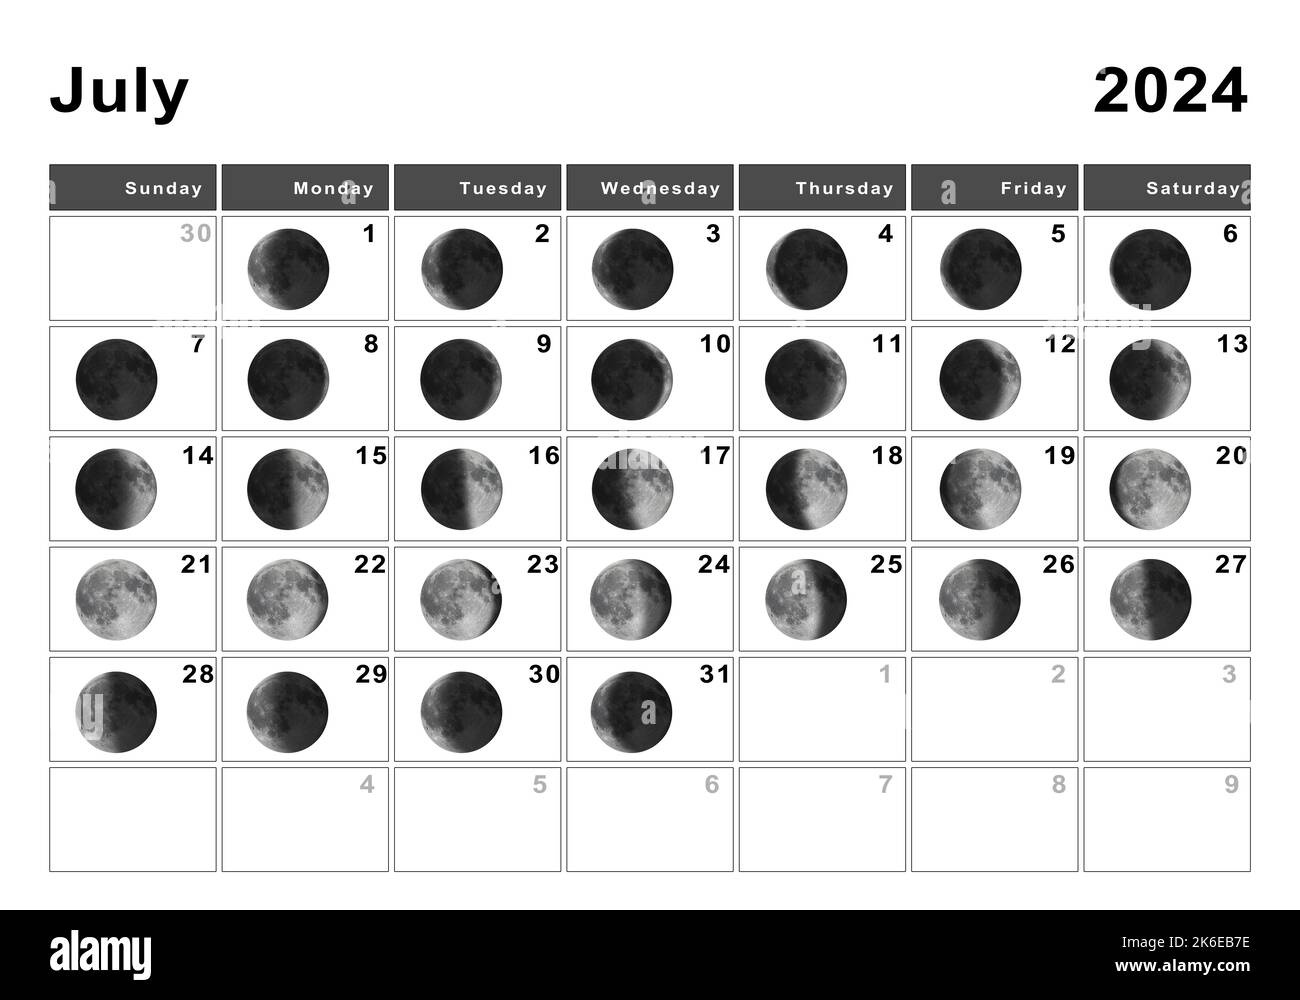 July 2024 Lunar Calendar, Moon Cycles, Moon Phases Stock Photo - Alamy for July 14 Lunar Calendar 2024